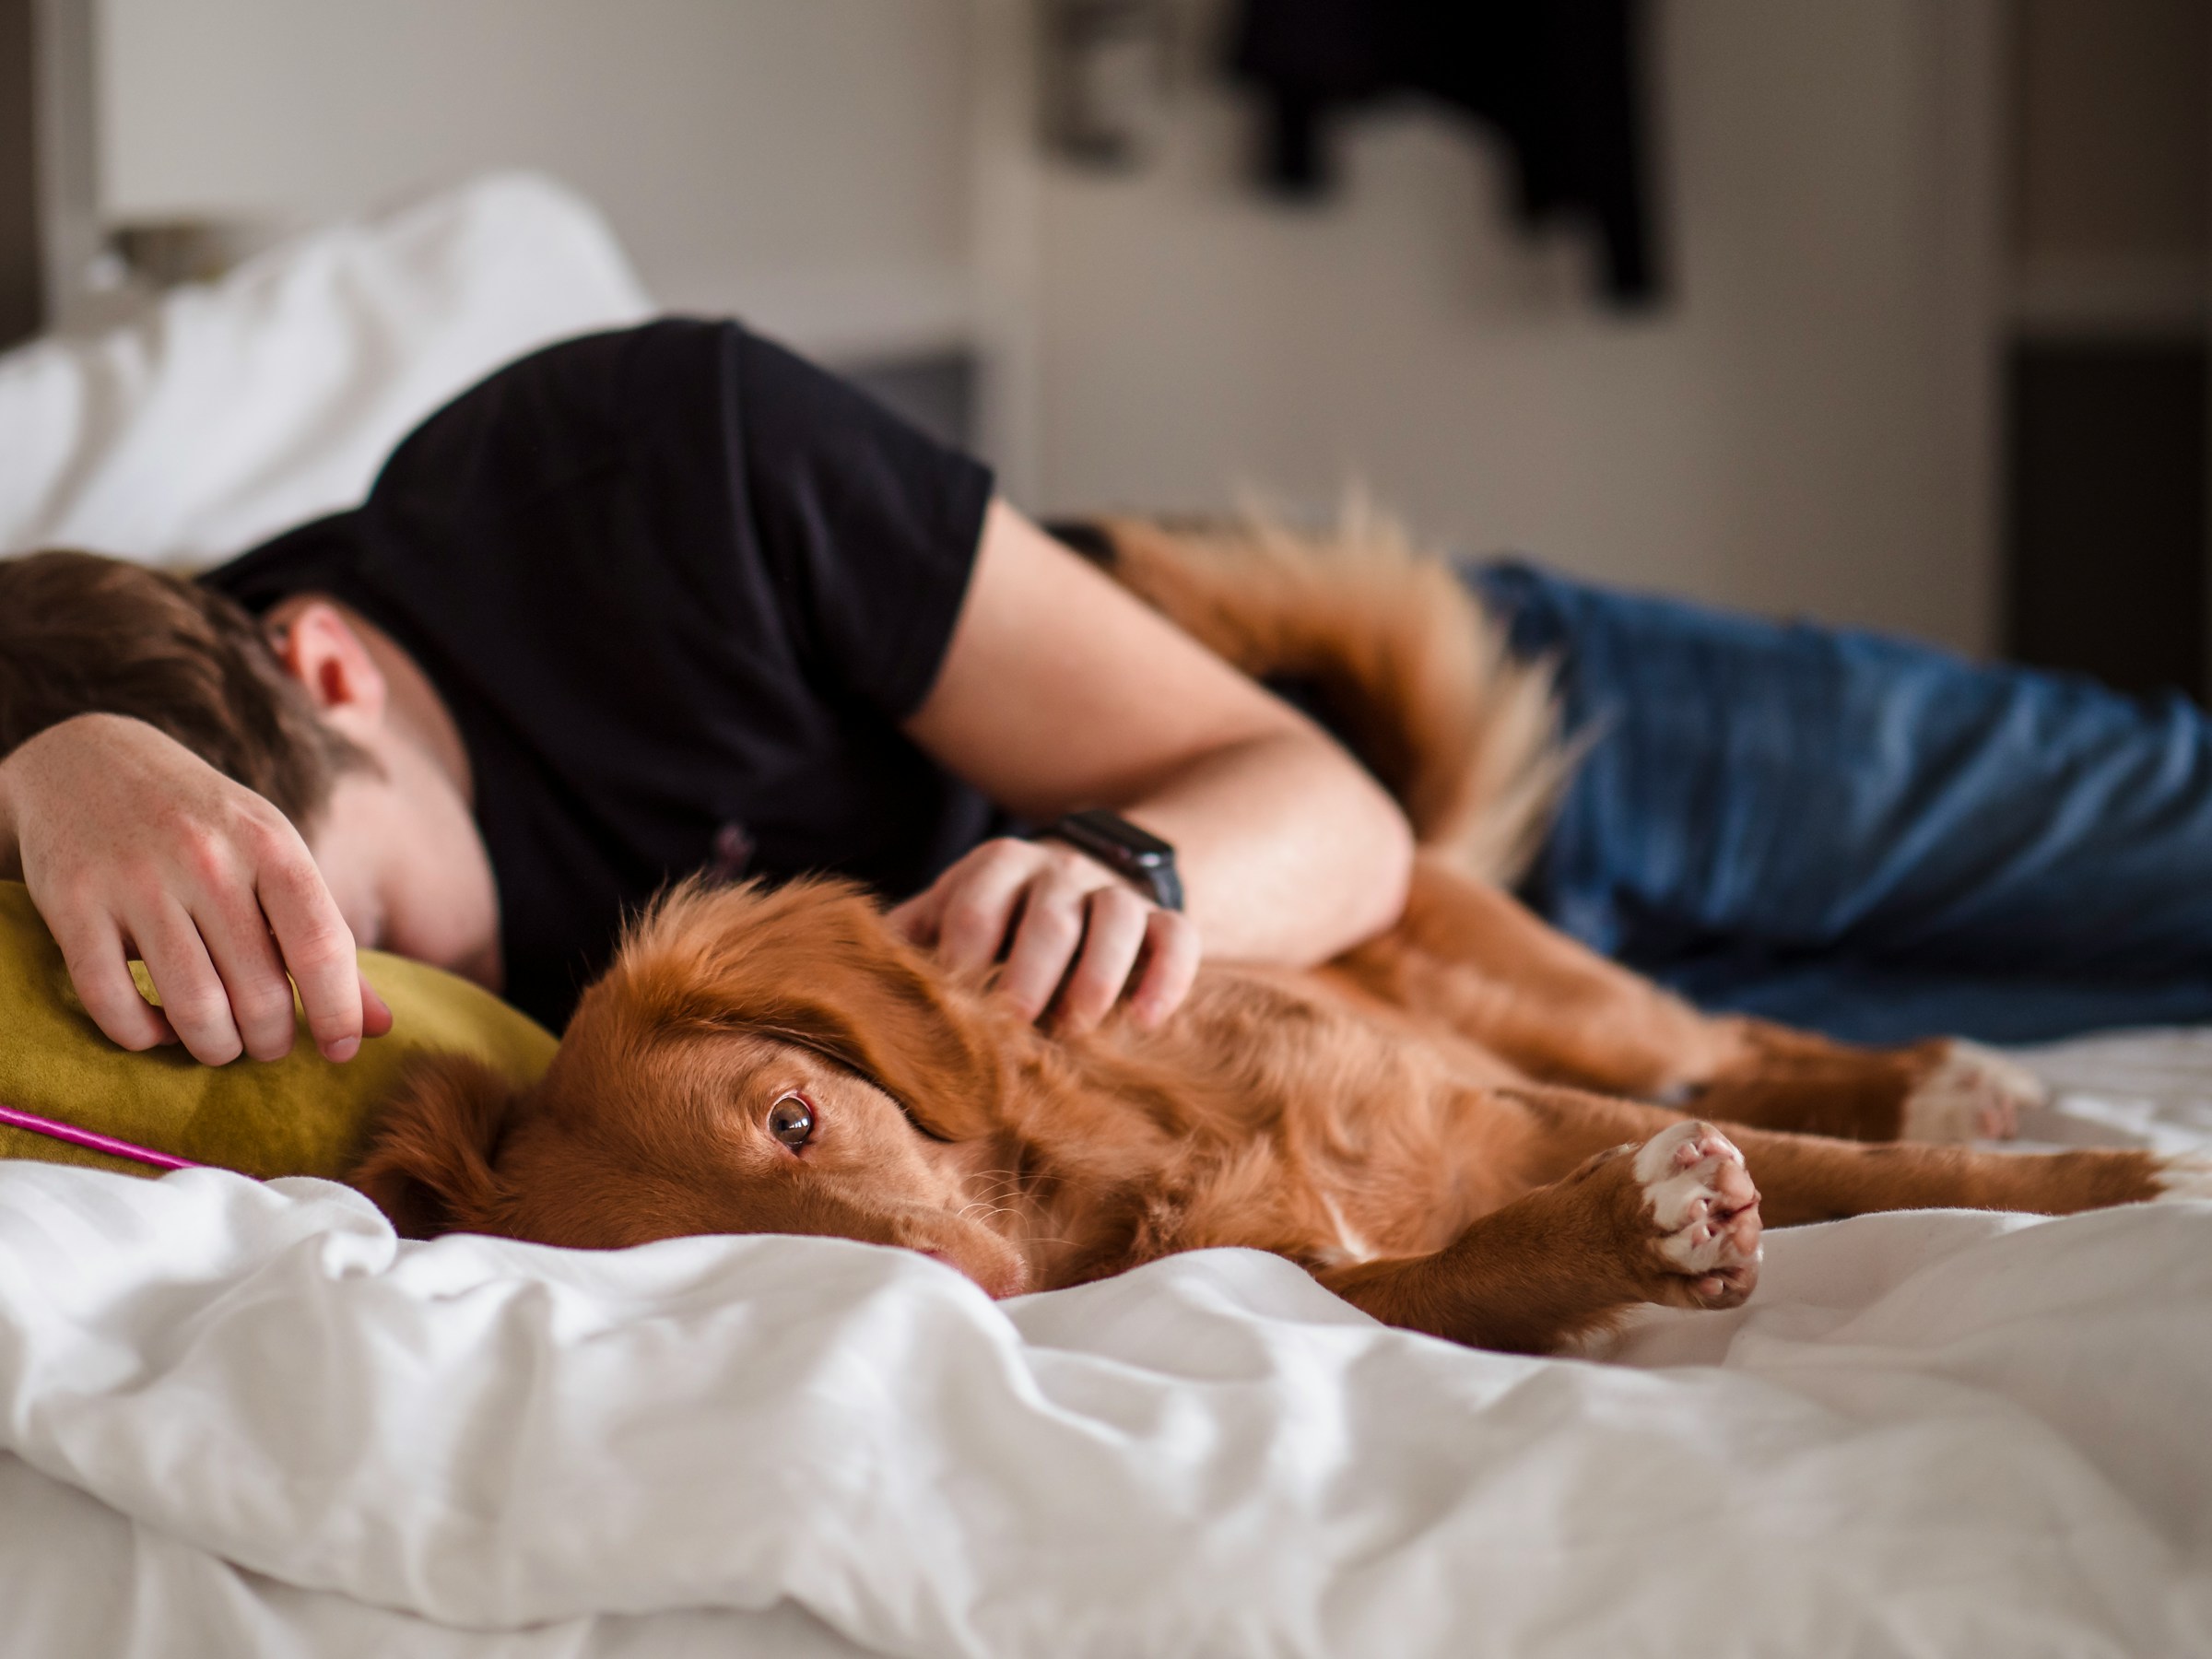 A man sleeping beside a dog | Source: Unsplash